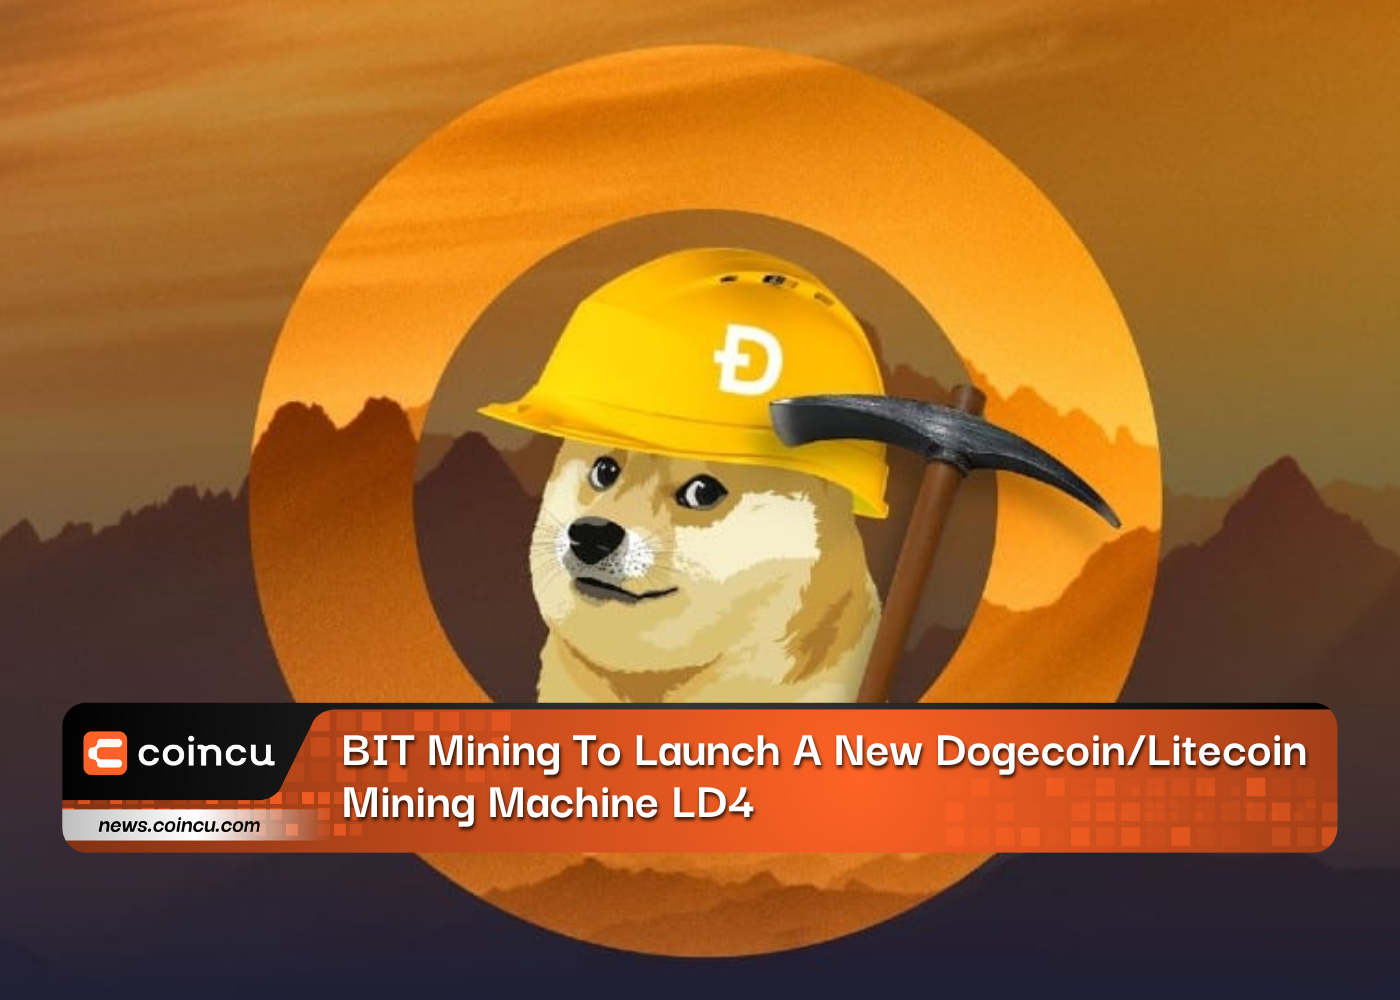 BIT Mining To Launch A New Dogecoin/Litecoin Mining Machine LD4